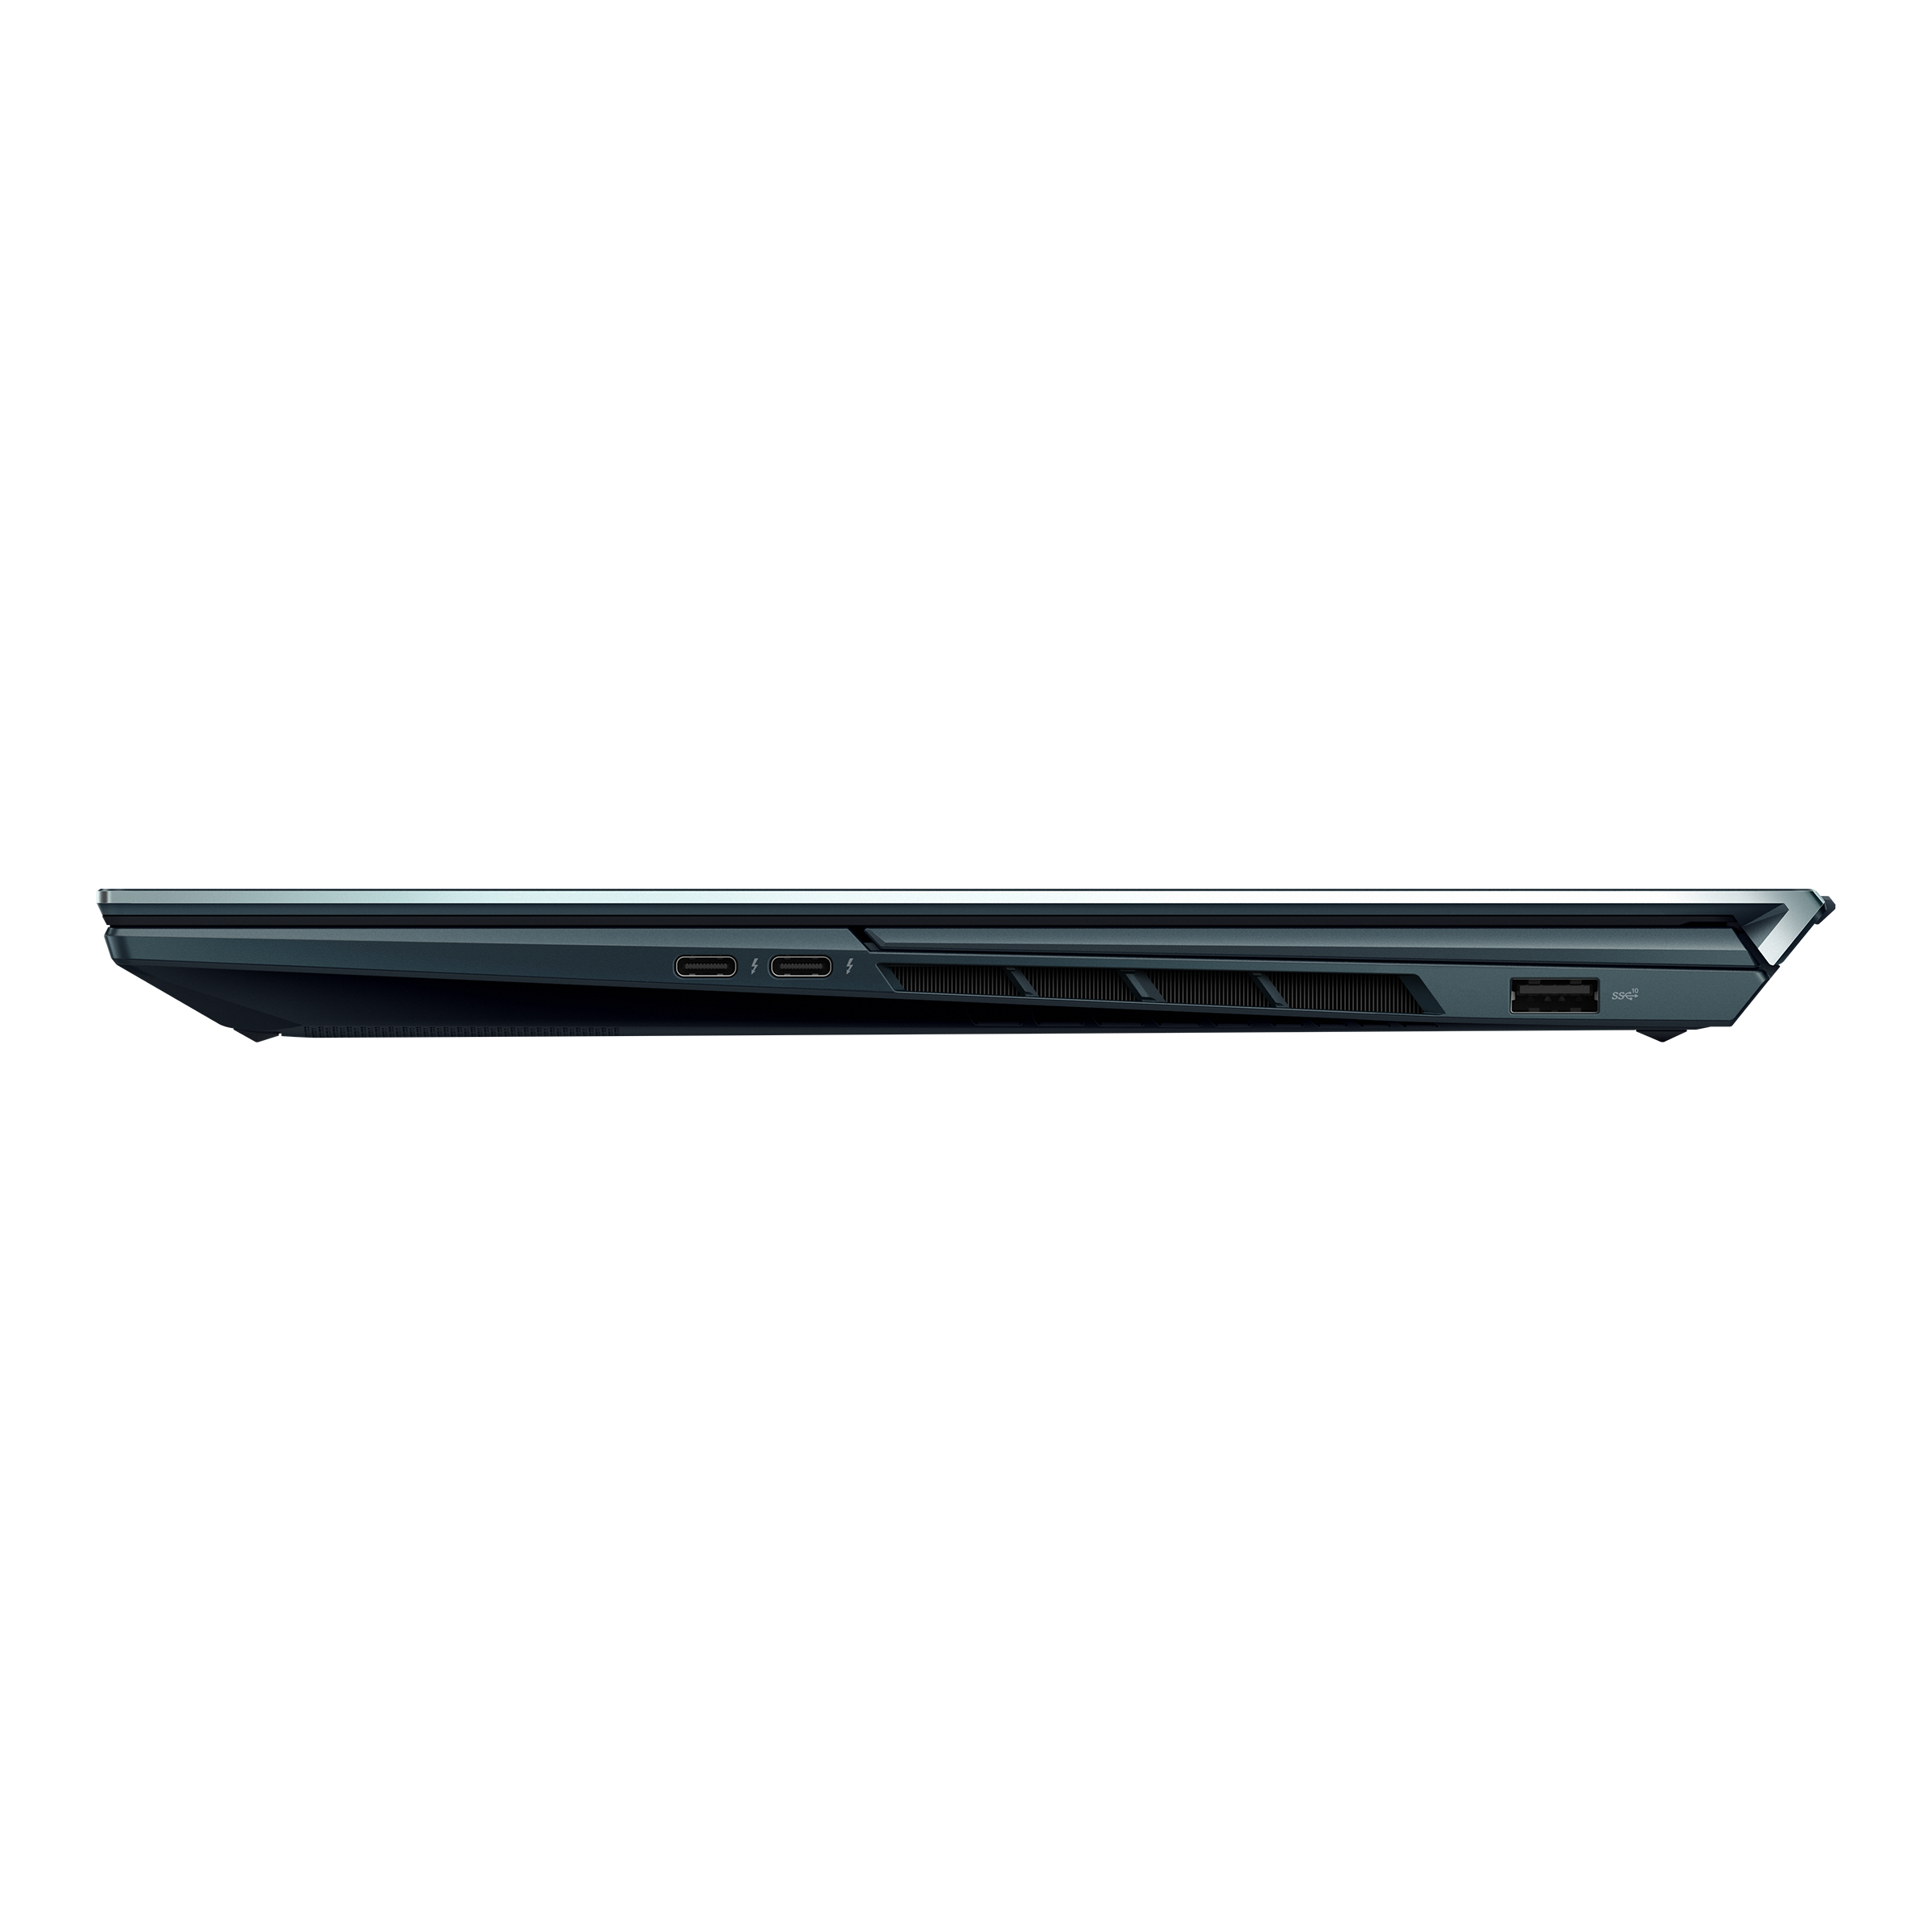 Best laptop deal: Get the Asus ZenBook Pro Duo 15 for $1,999.99